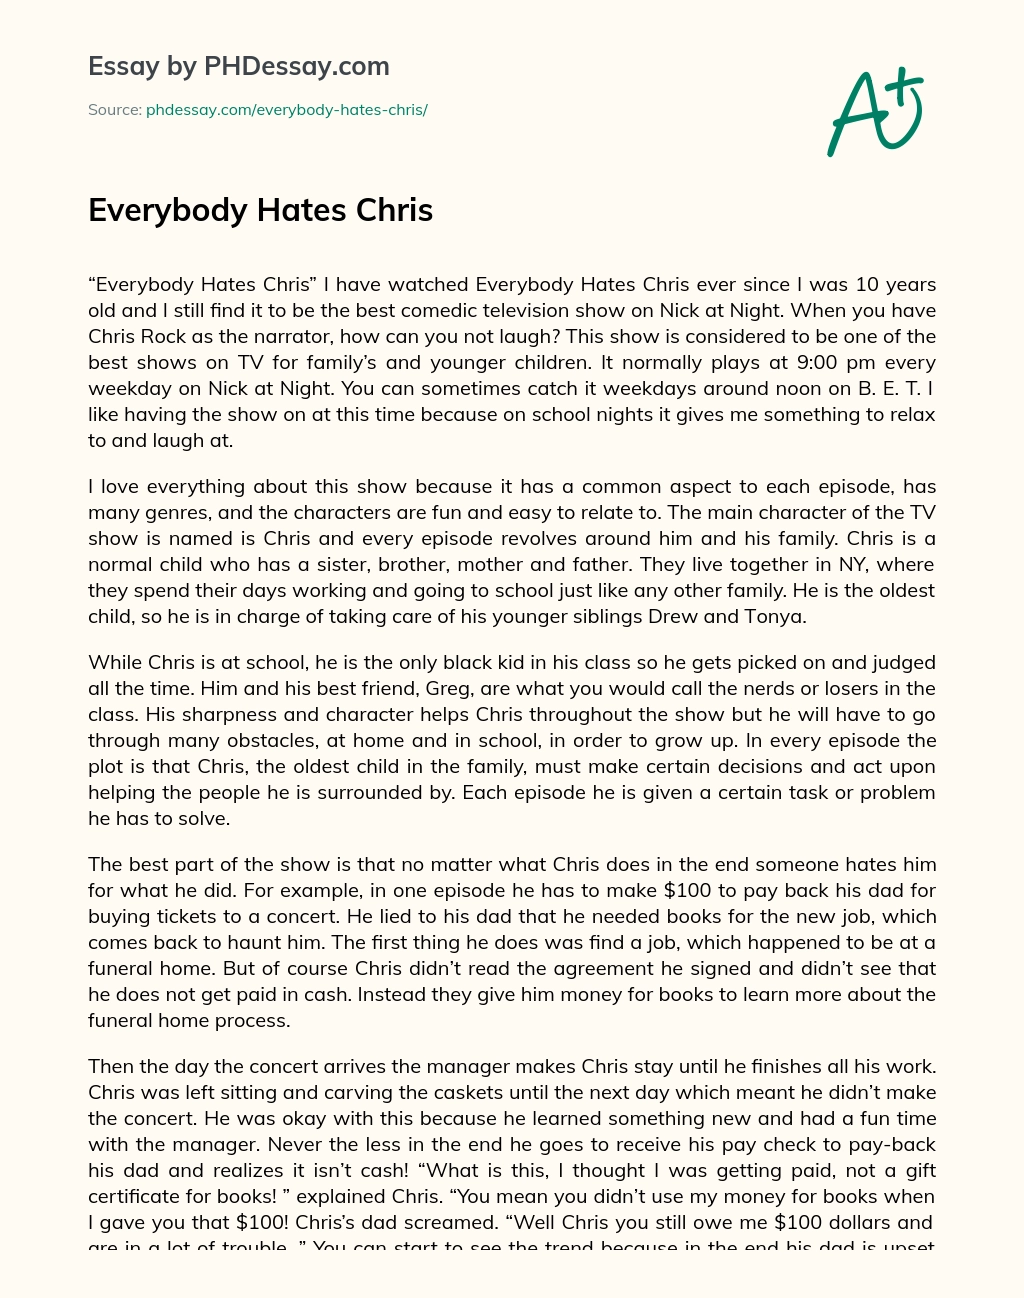 Everybody Hates Chris essay